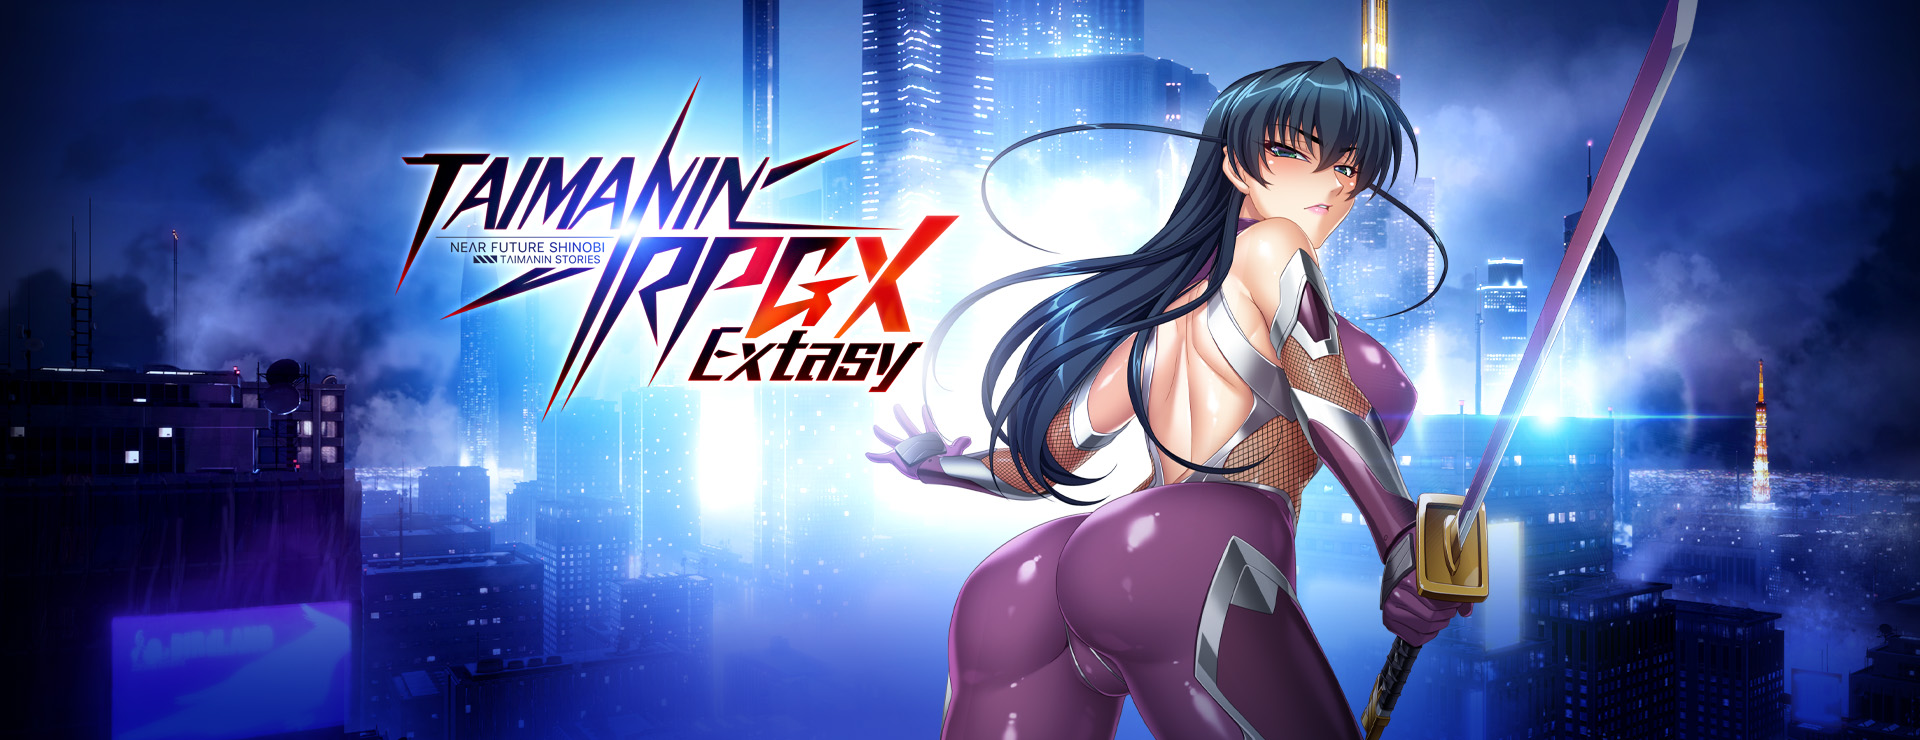 Taimanin RPGX Extasy - RPG Spiel